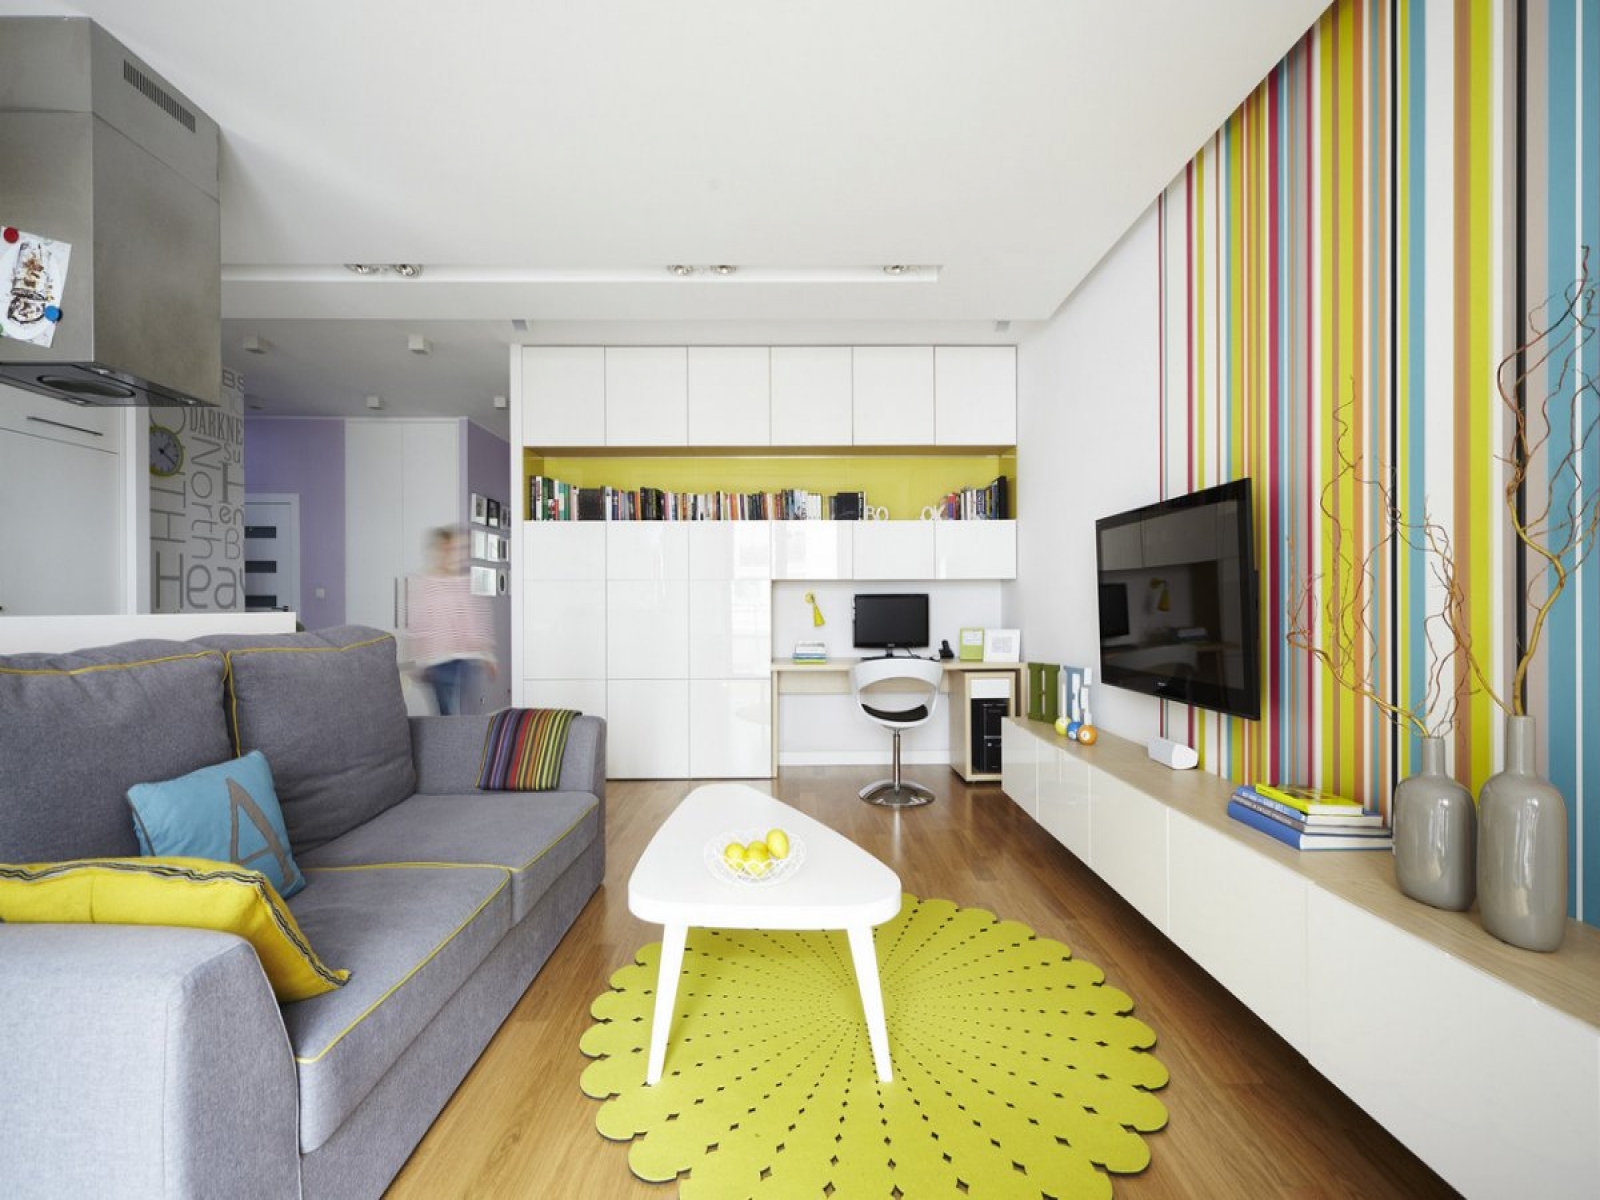 Interior Design Ideas Small Room